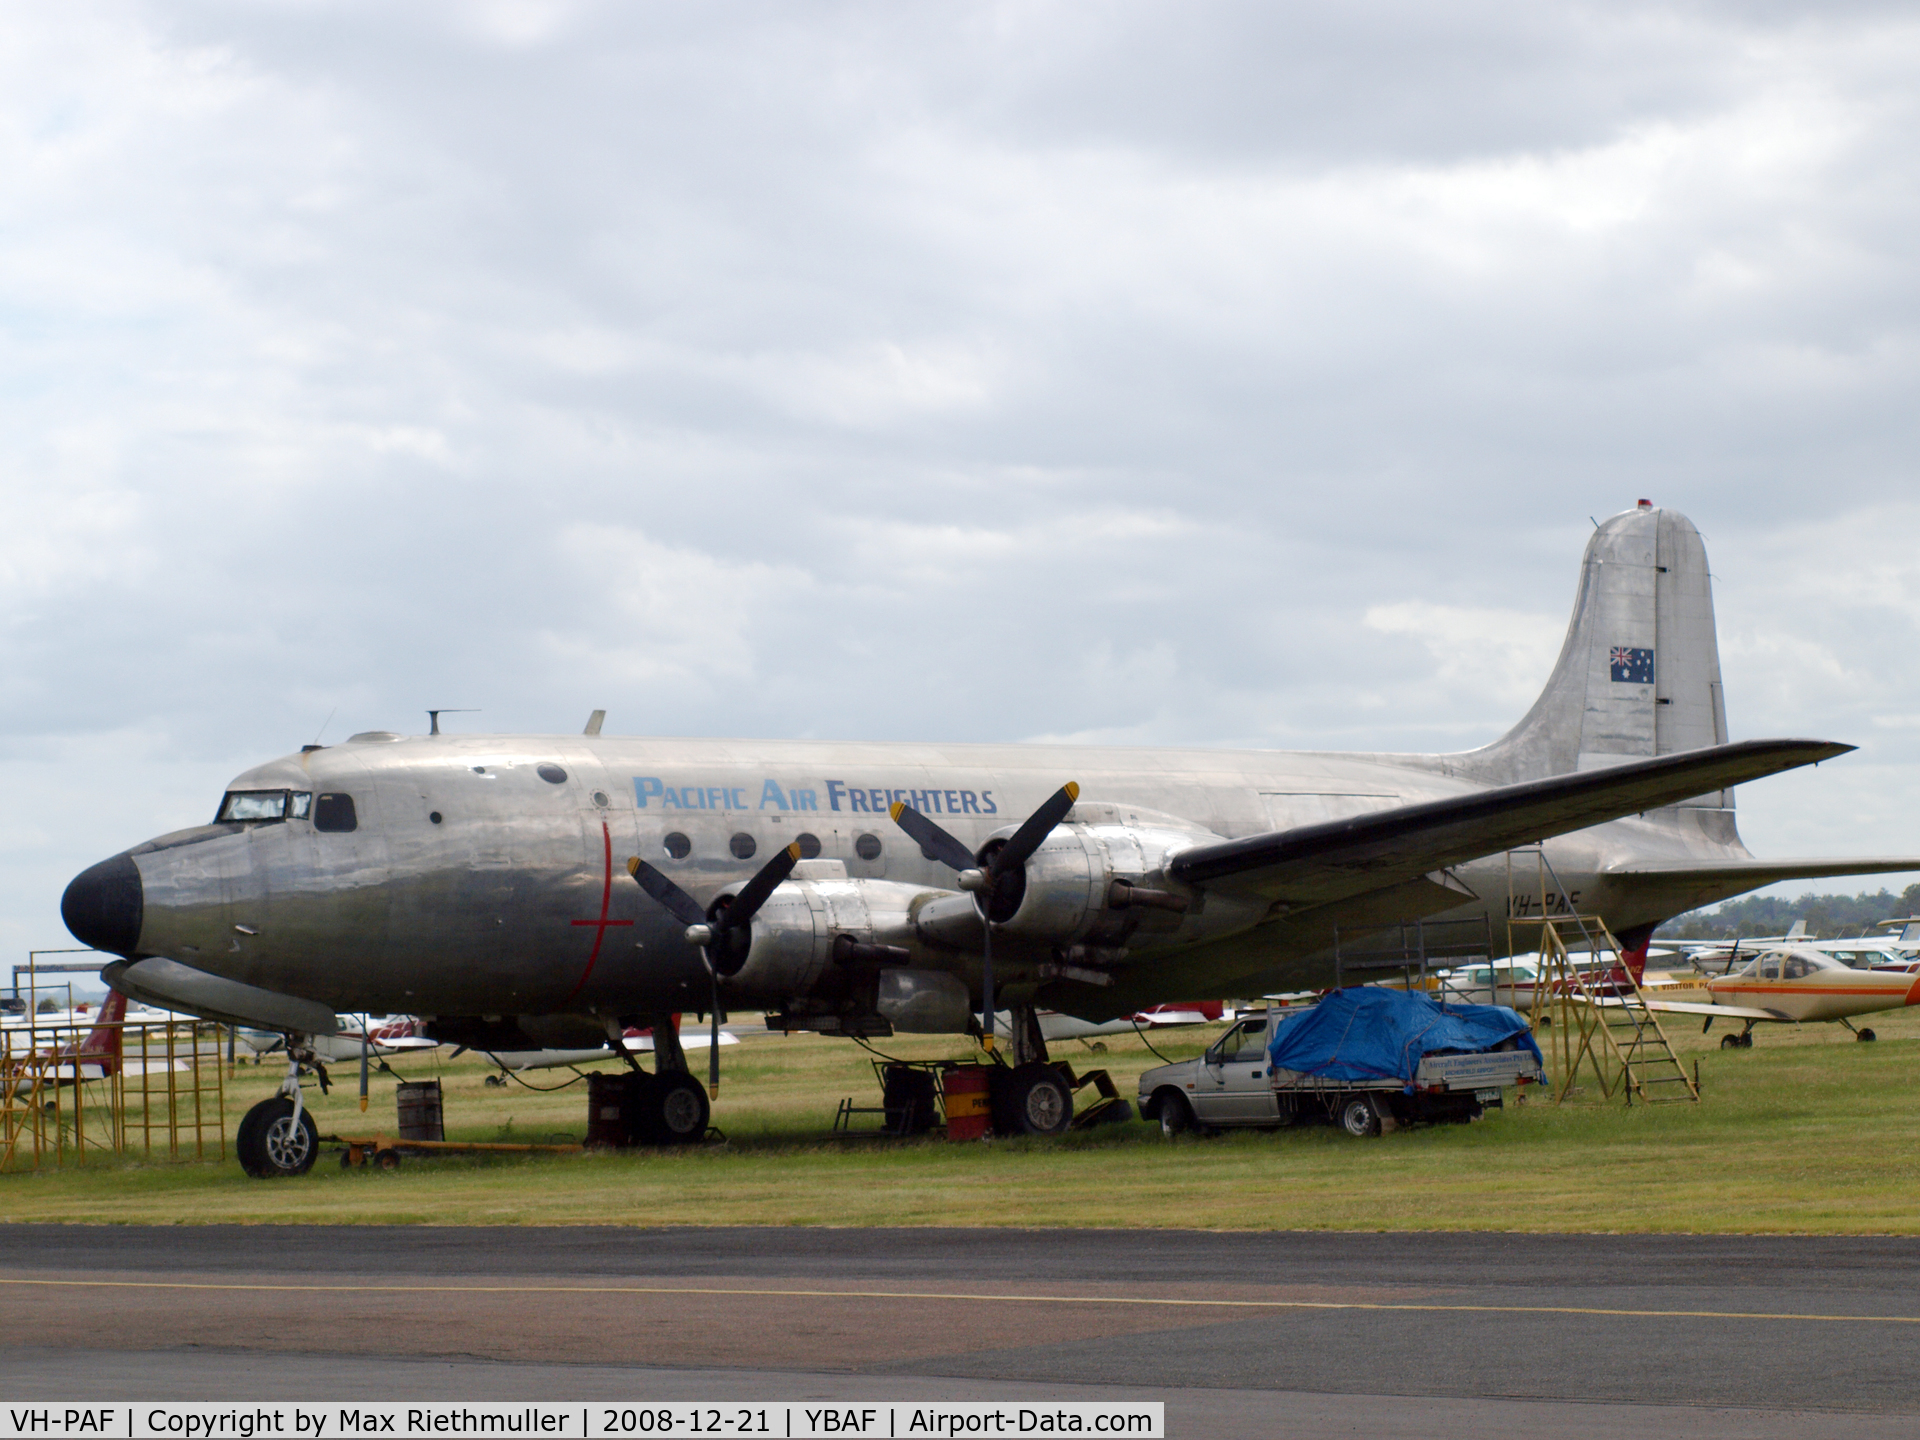 VH-PAF, 1945 Douglas C-54E-15-DO Skymaster (DC-4) C/N 27352, Douglas DC4, Pacific Air Freighters